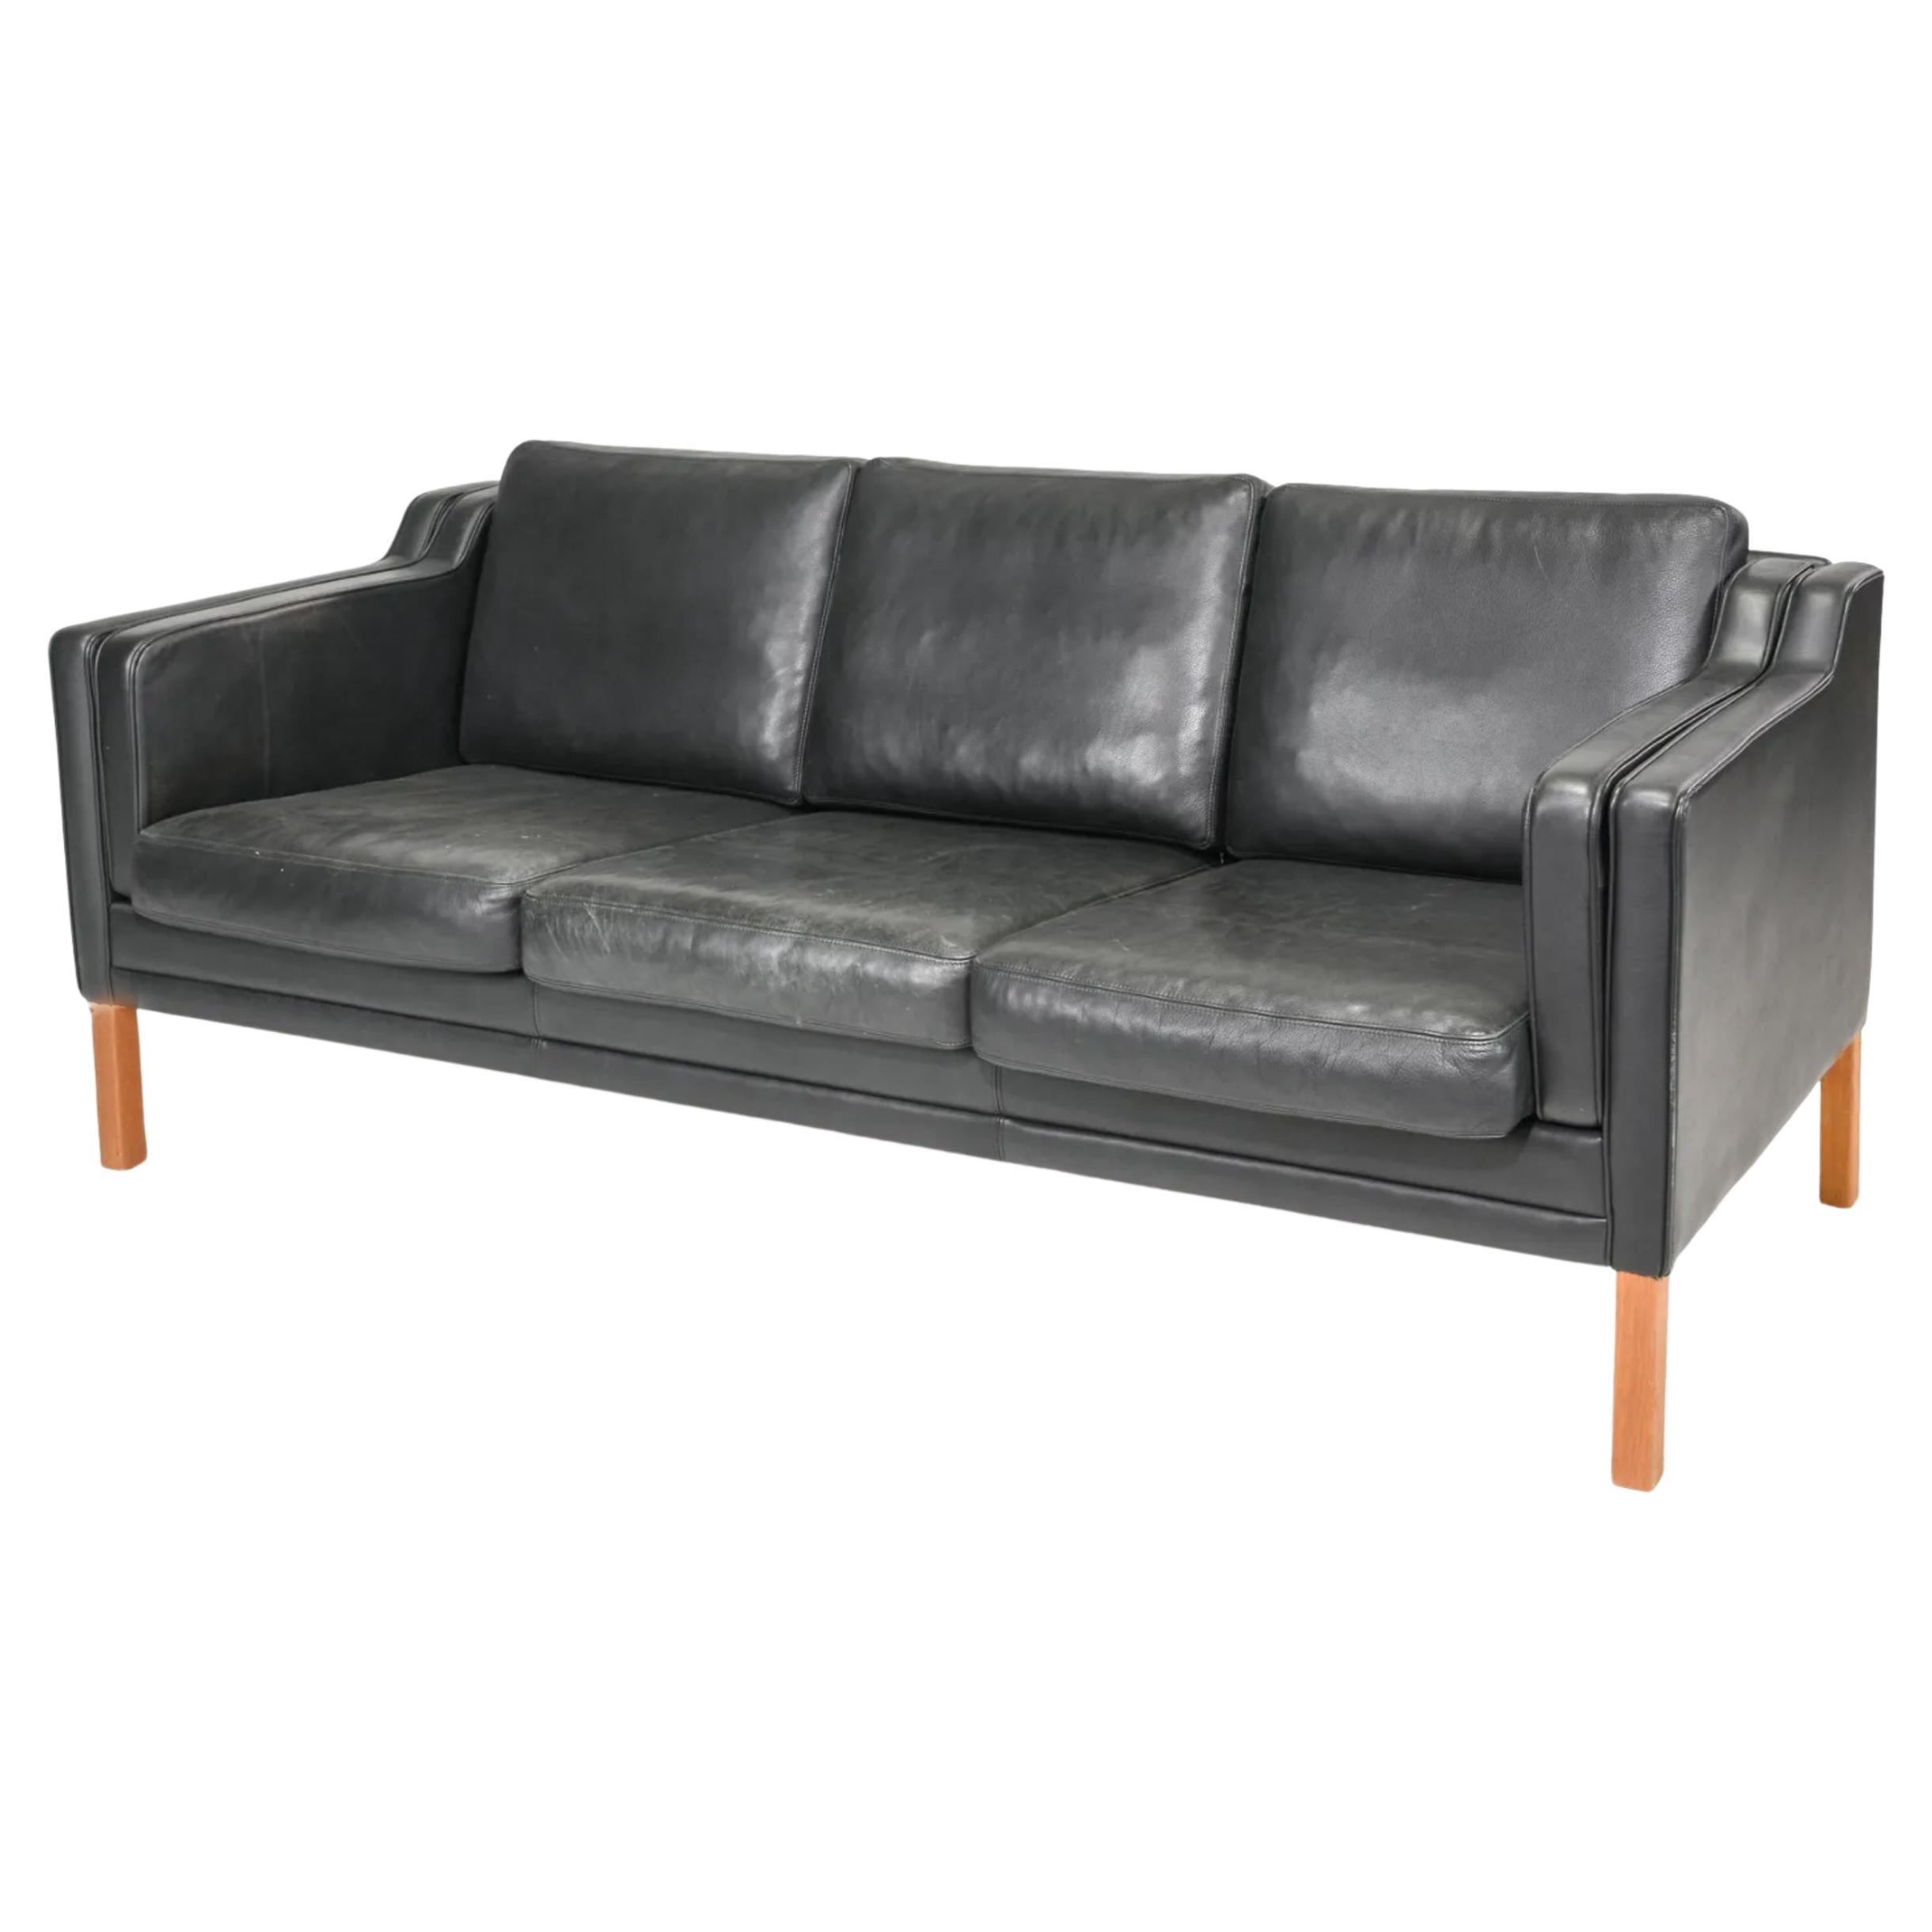 Great Midcentury Danish Modern Beautiful Black Leather 3 Seat Sofa Wood Legs For Sale